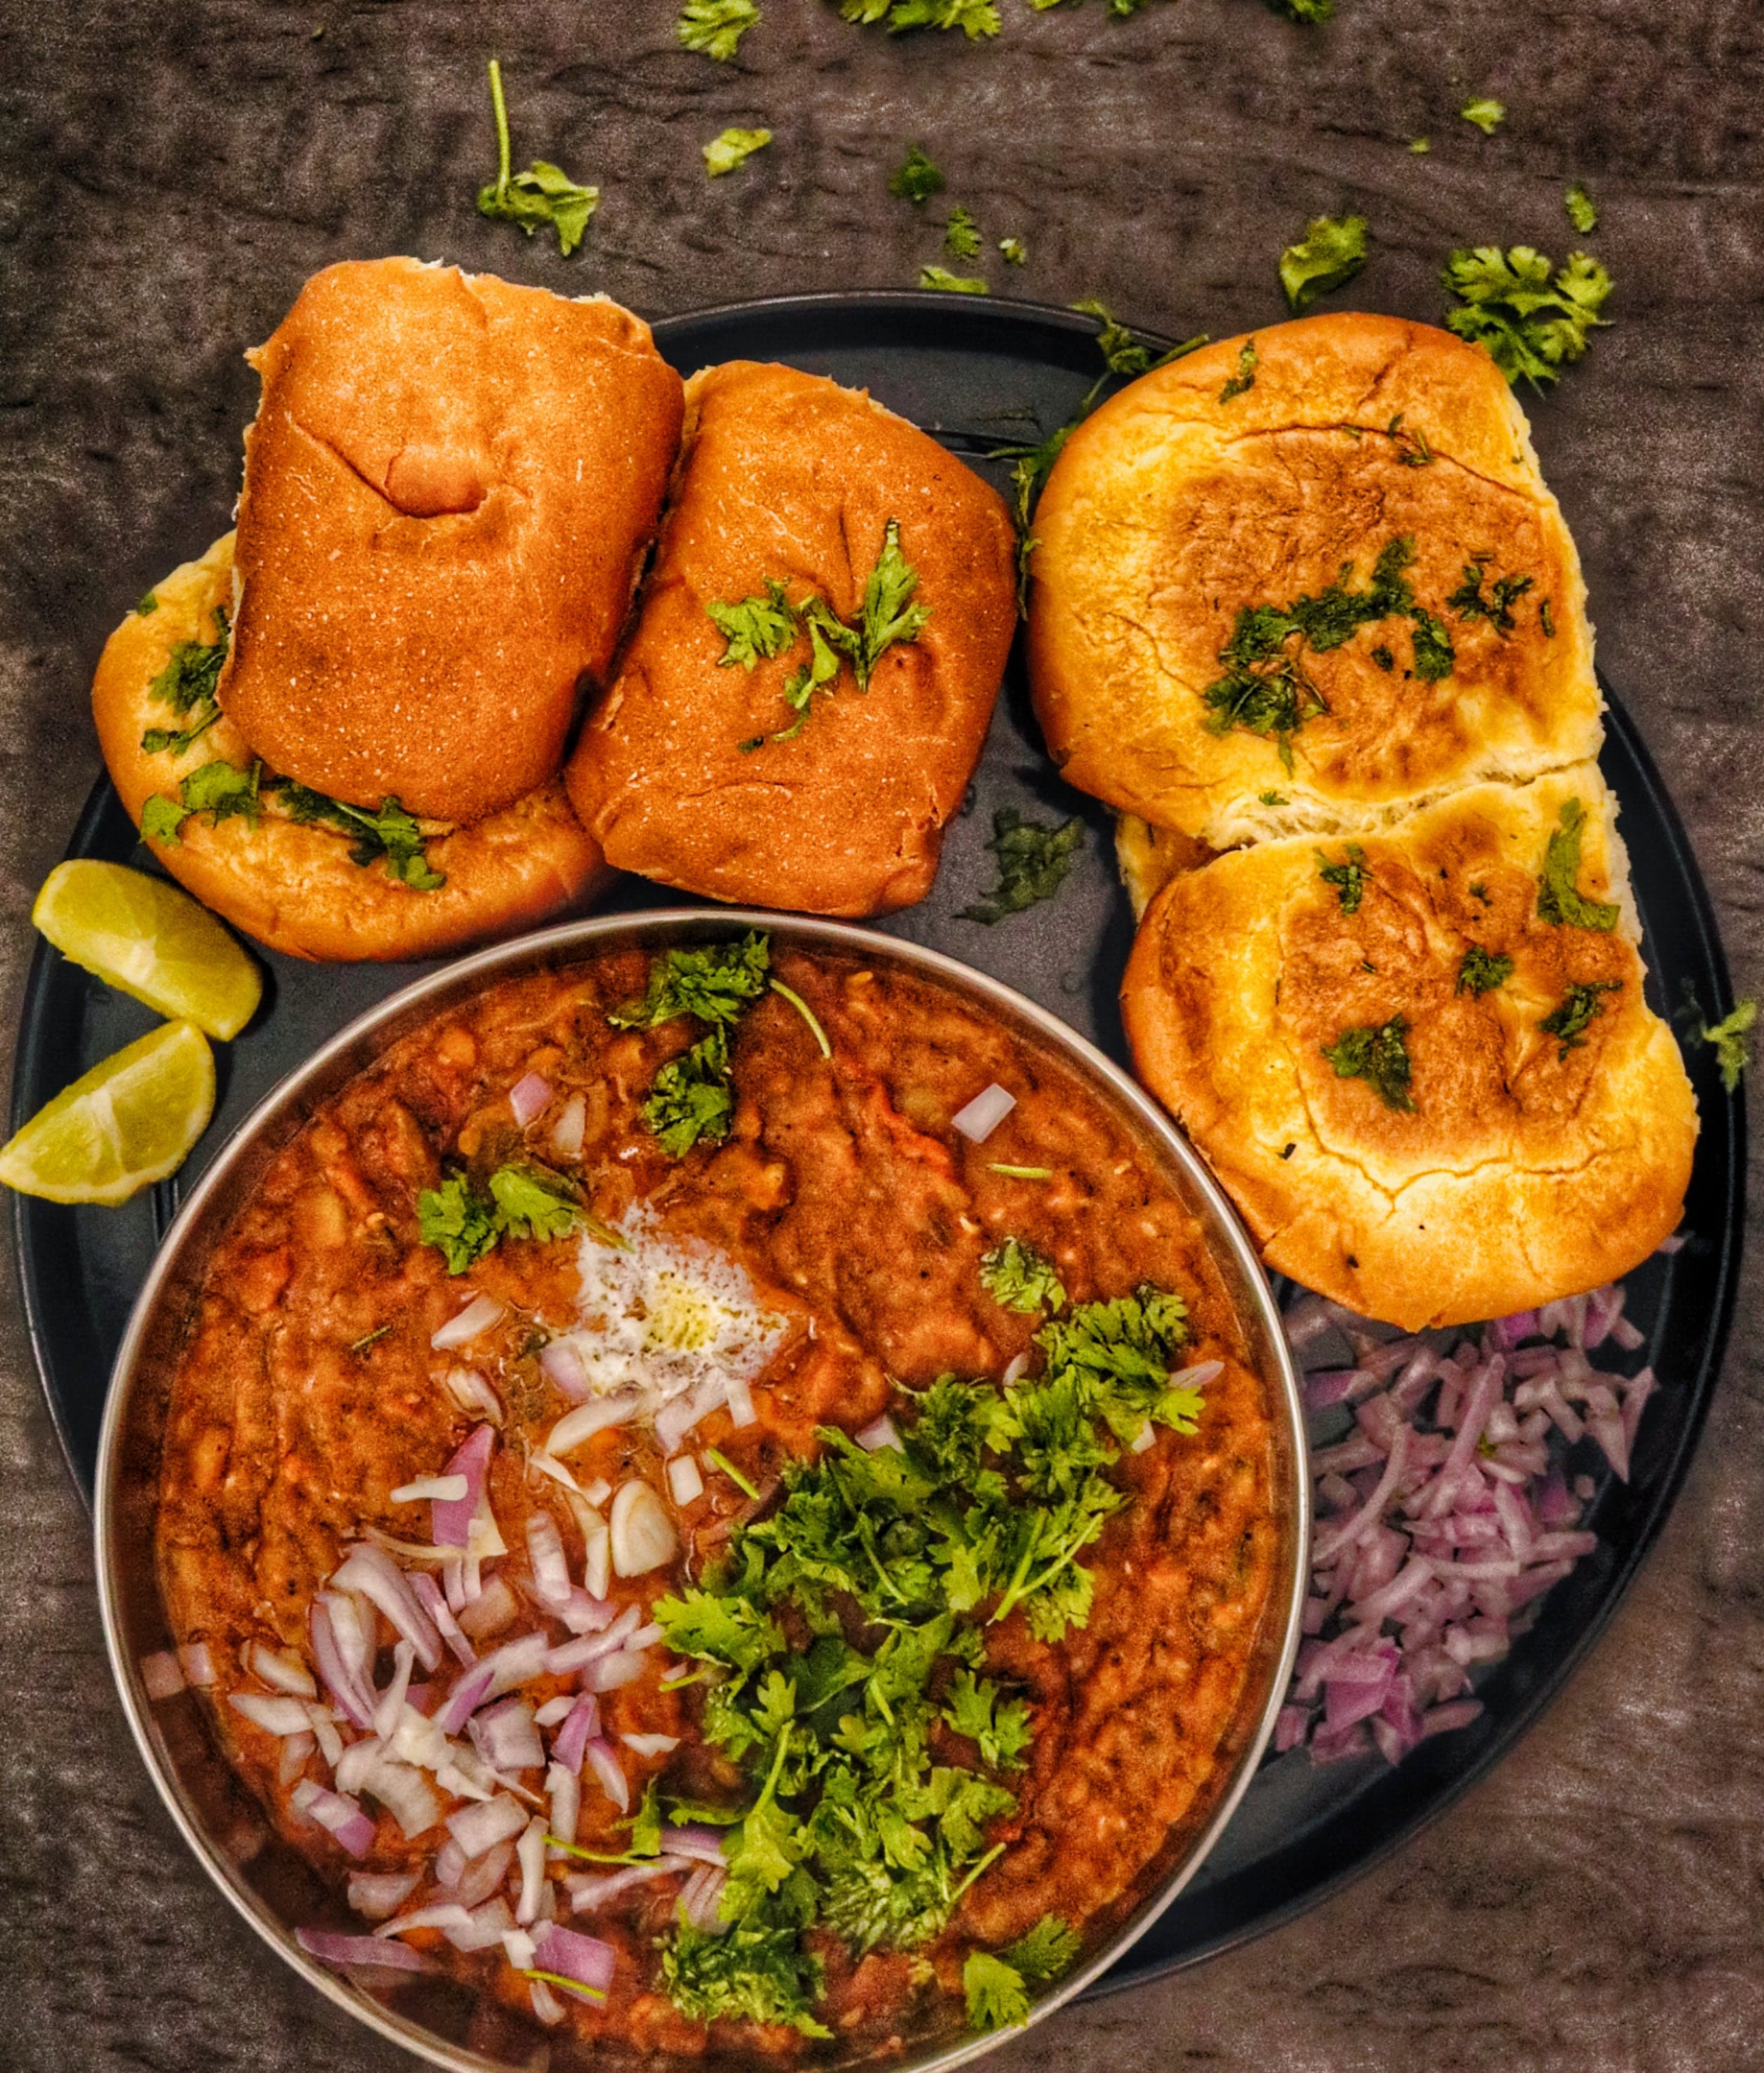 Mumbai-style Pav Bhaji, a tempting Indian street food delight